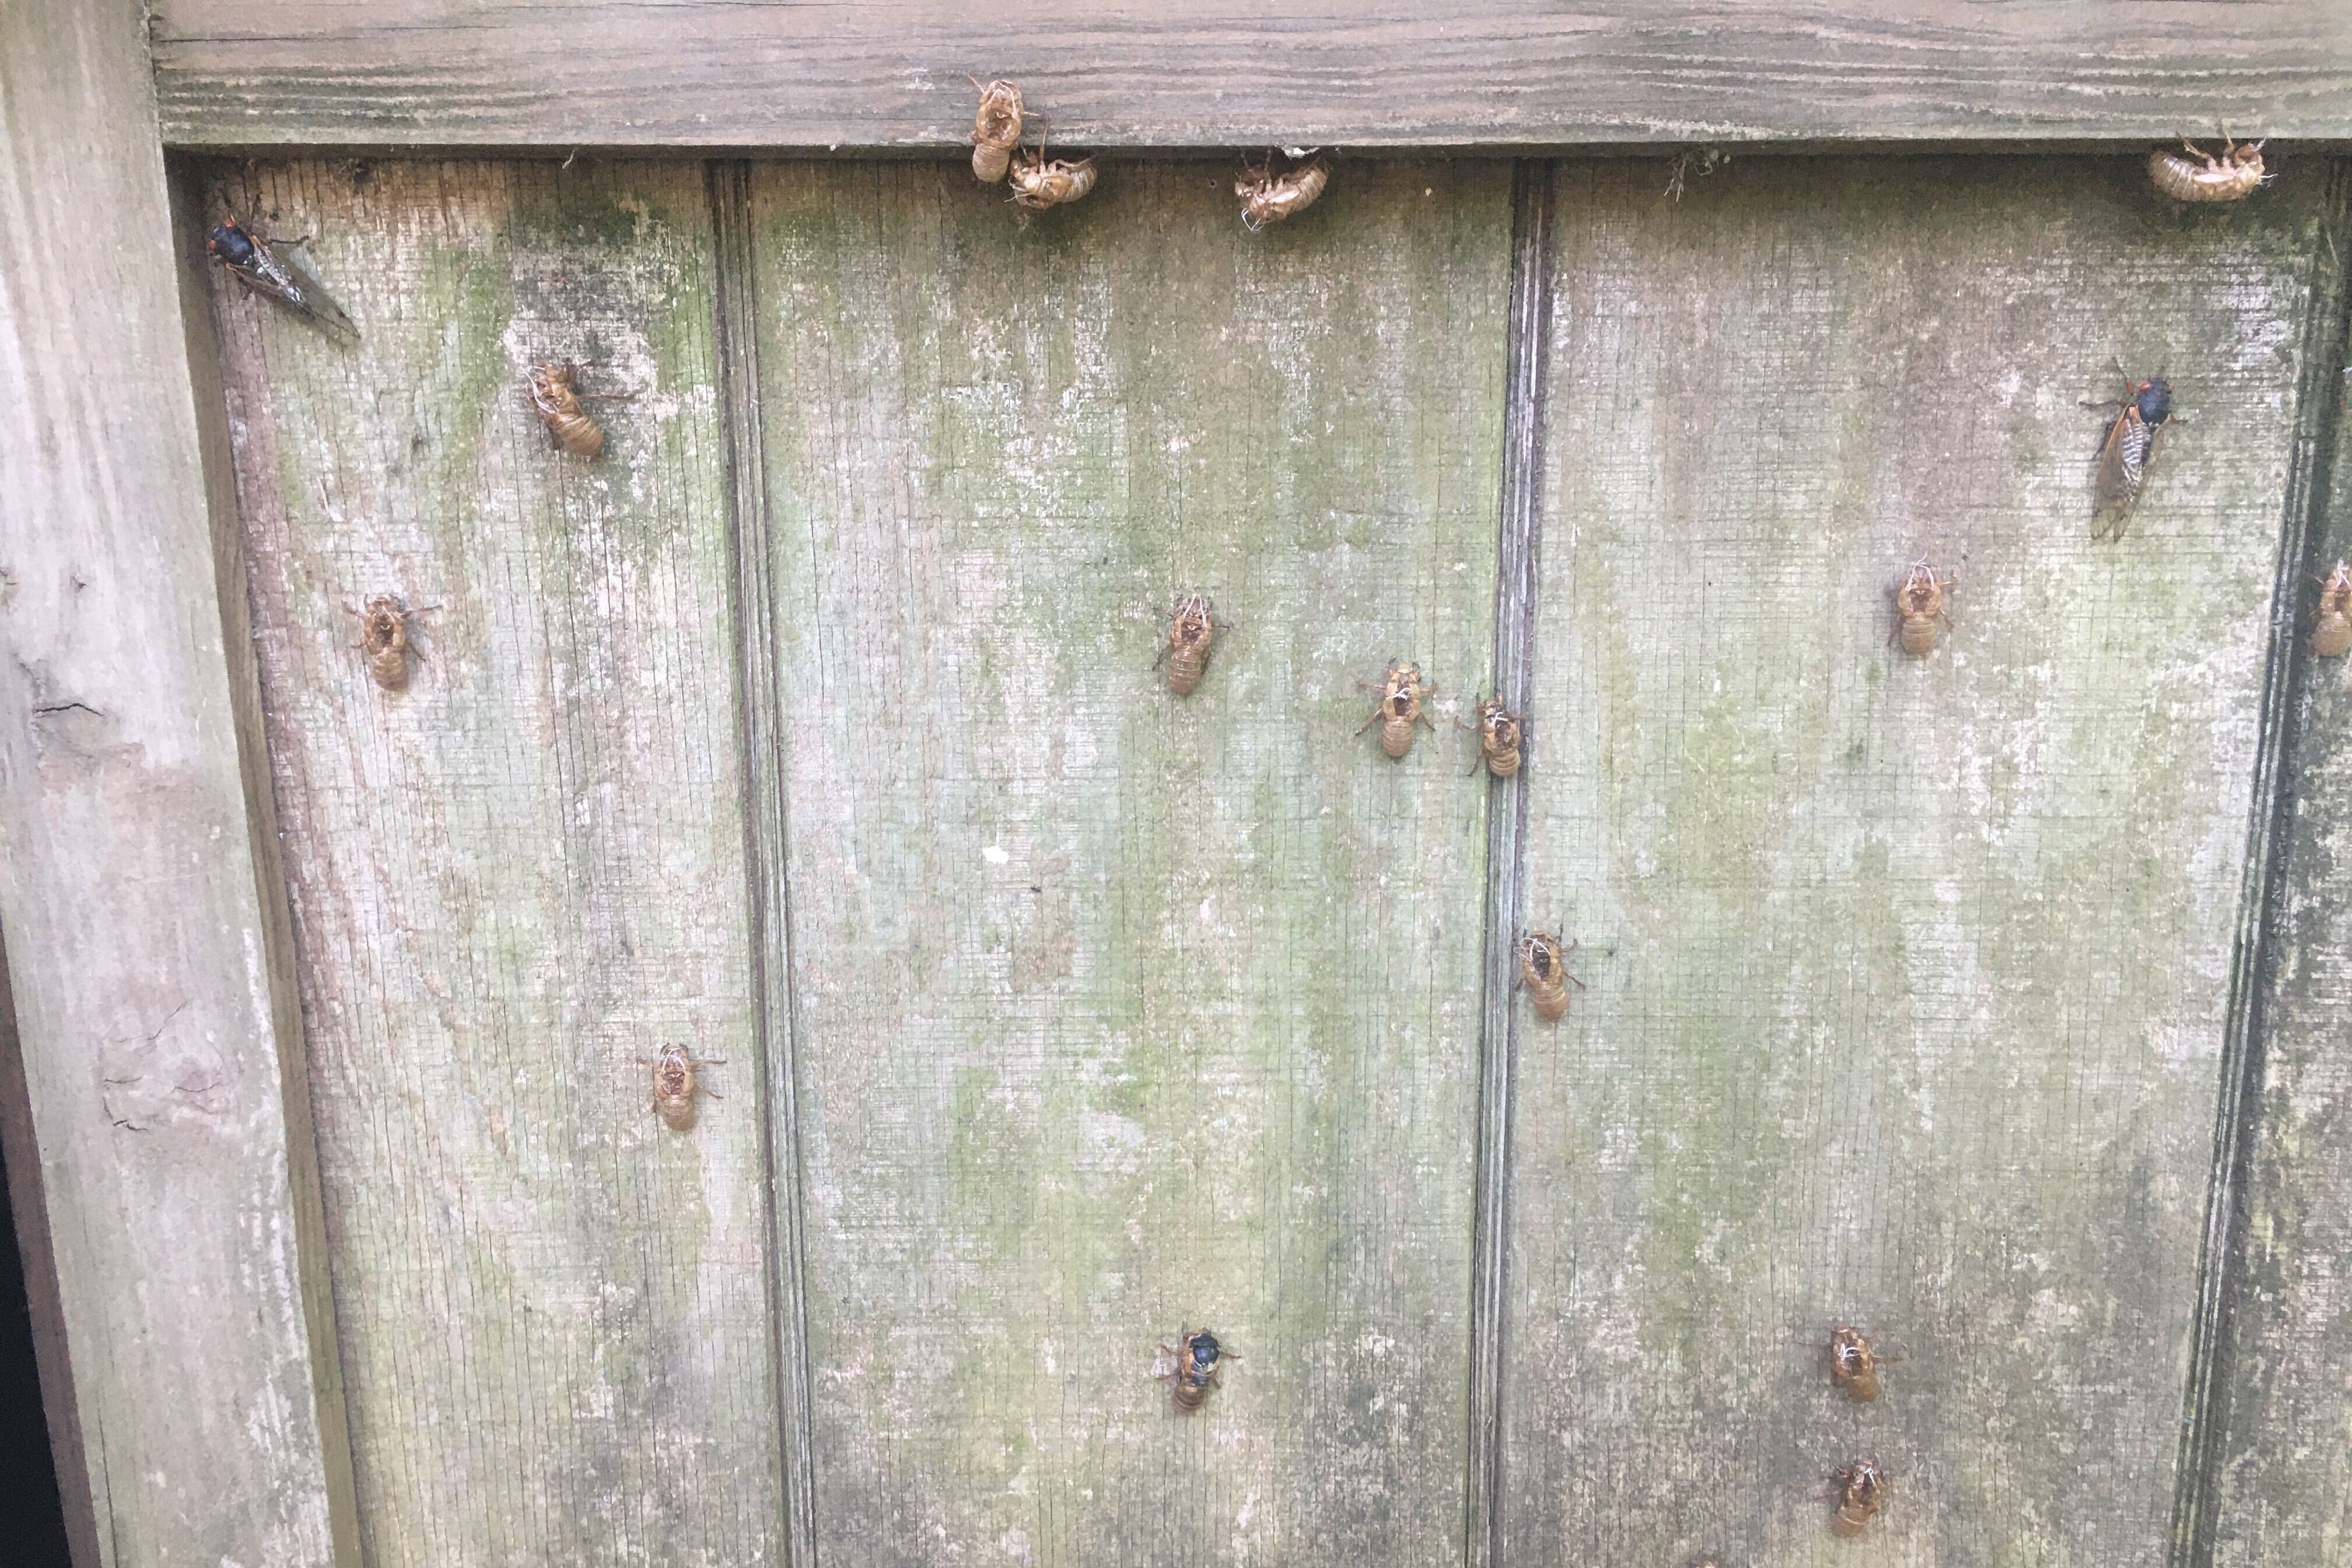 cicada shells on a fence 